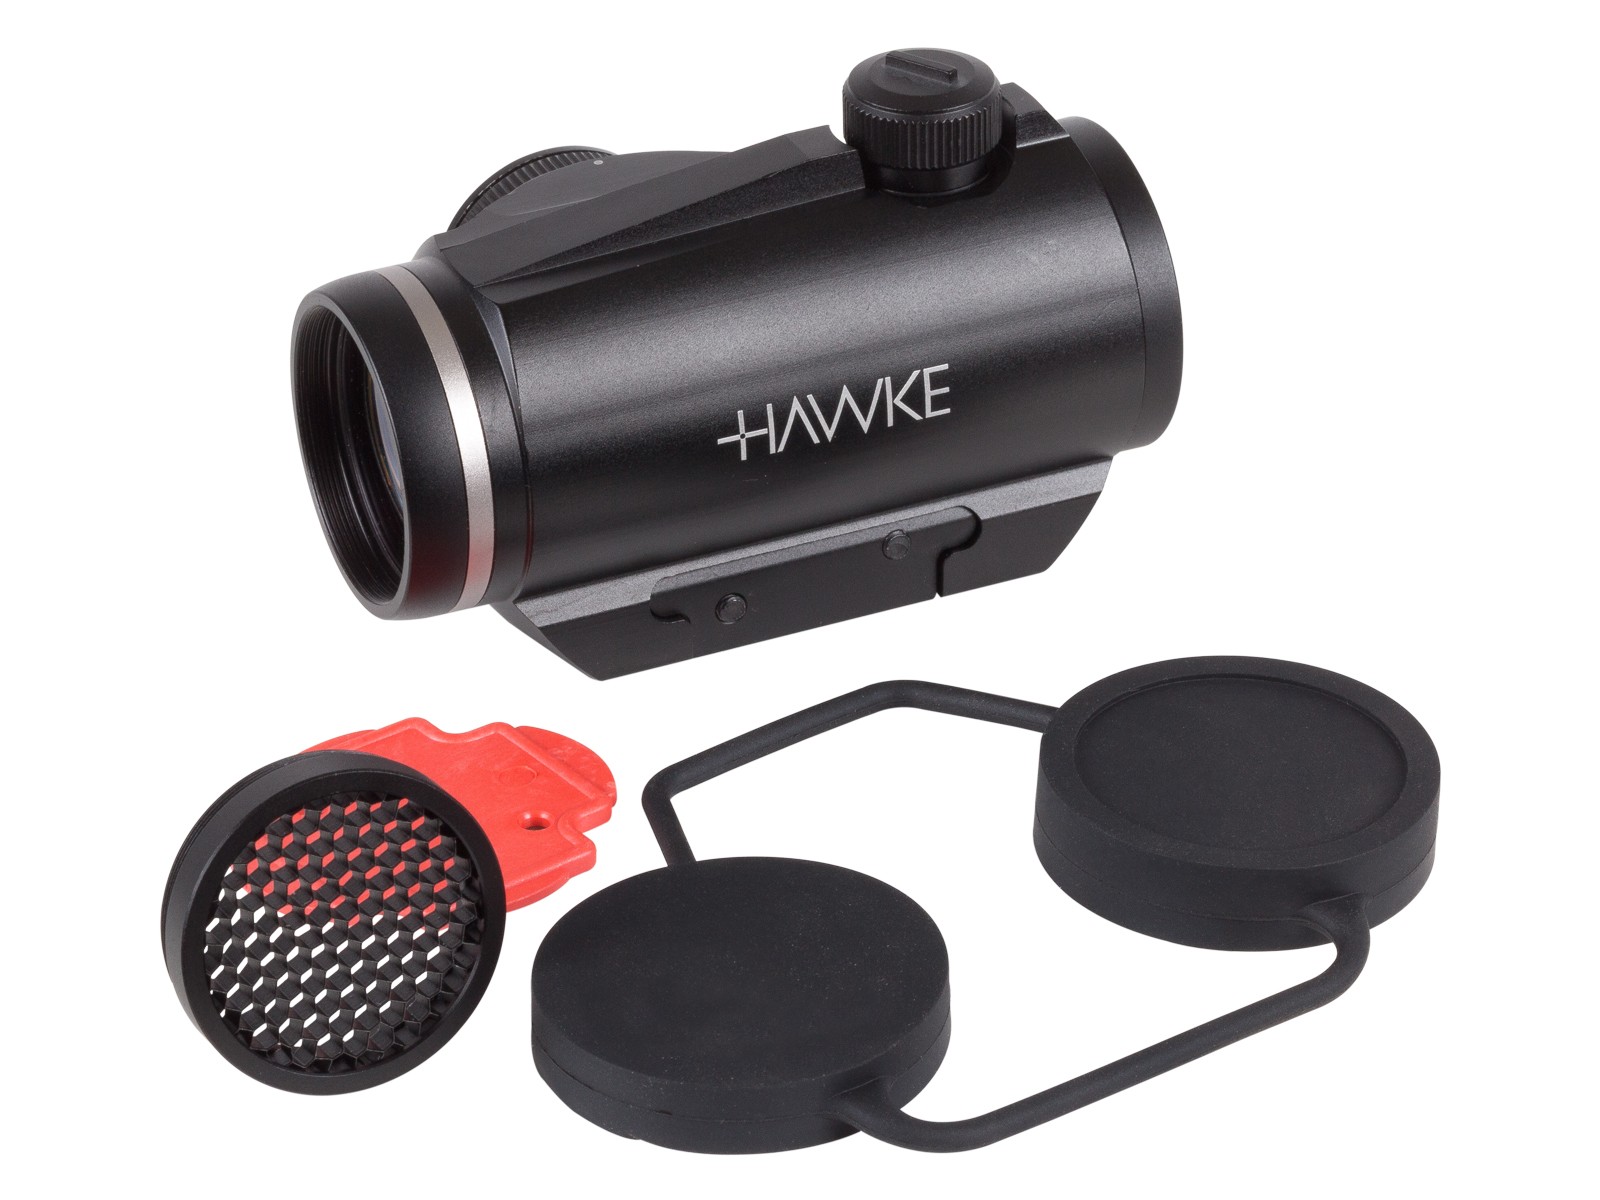 Hawke Red Dot Sights Vantage RD 1x30, Weaver (3 moa dot)